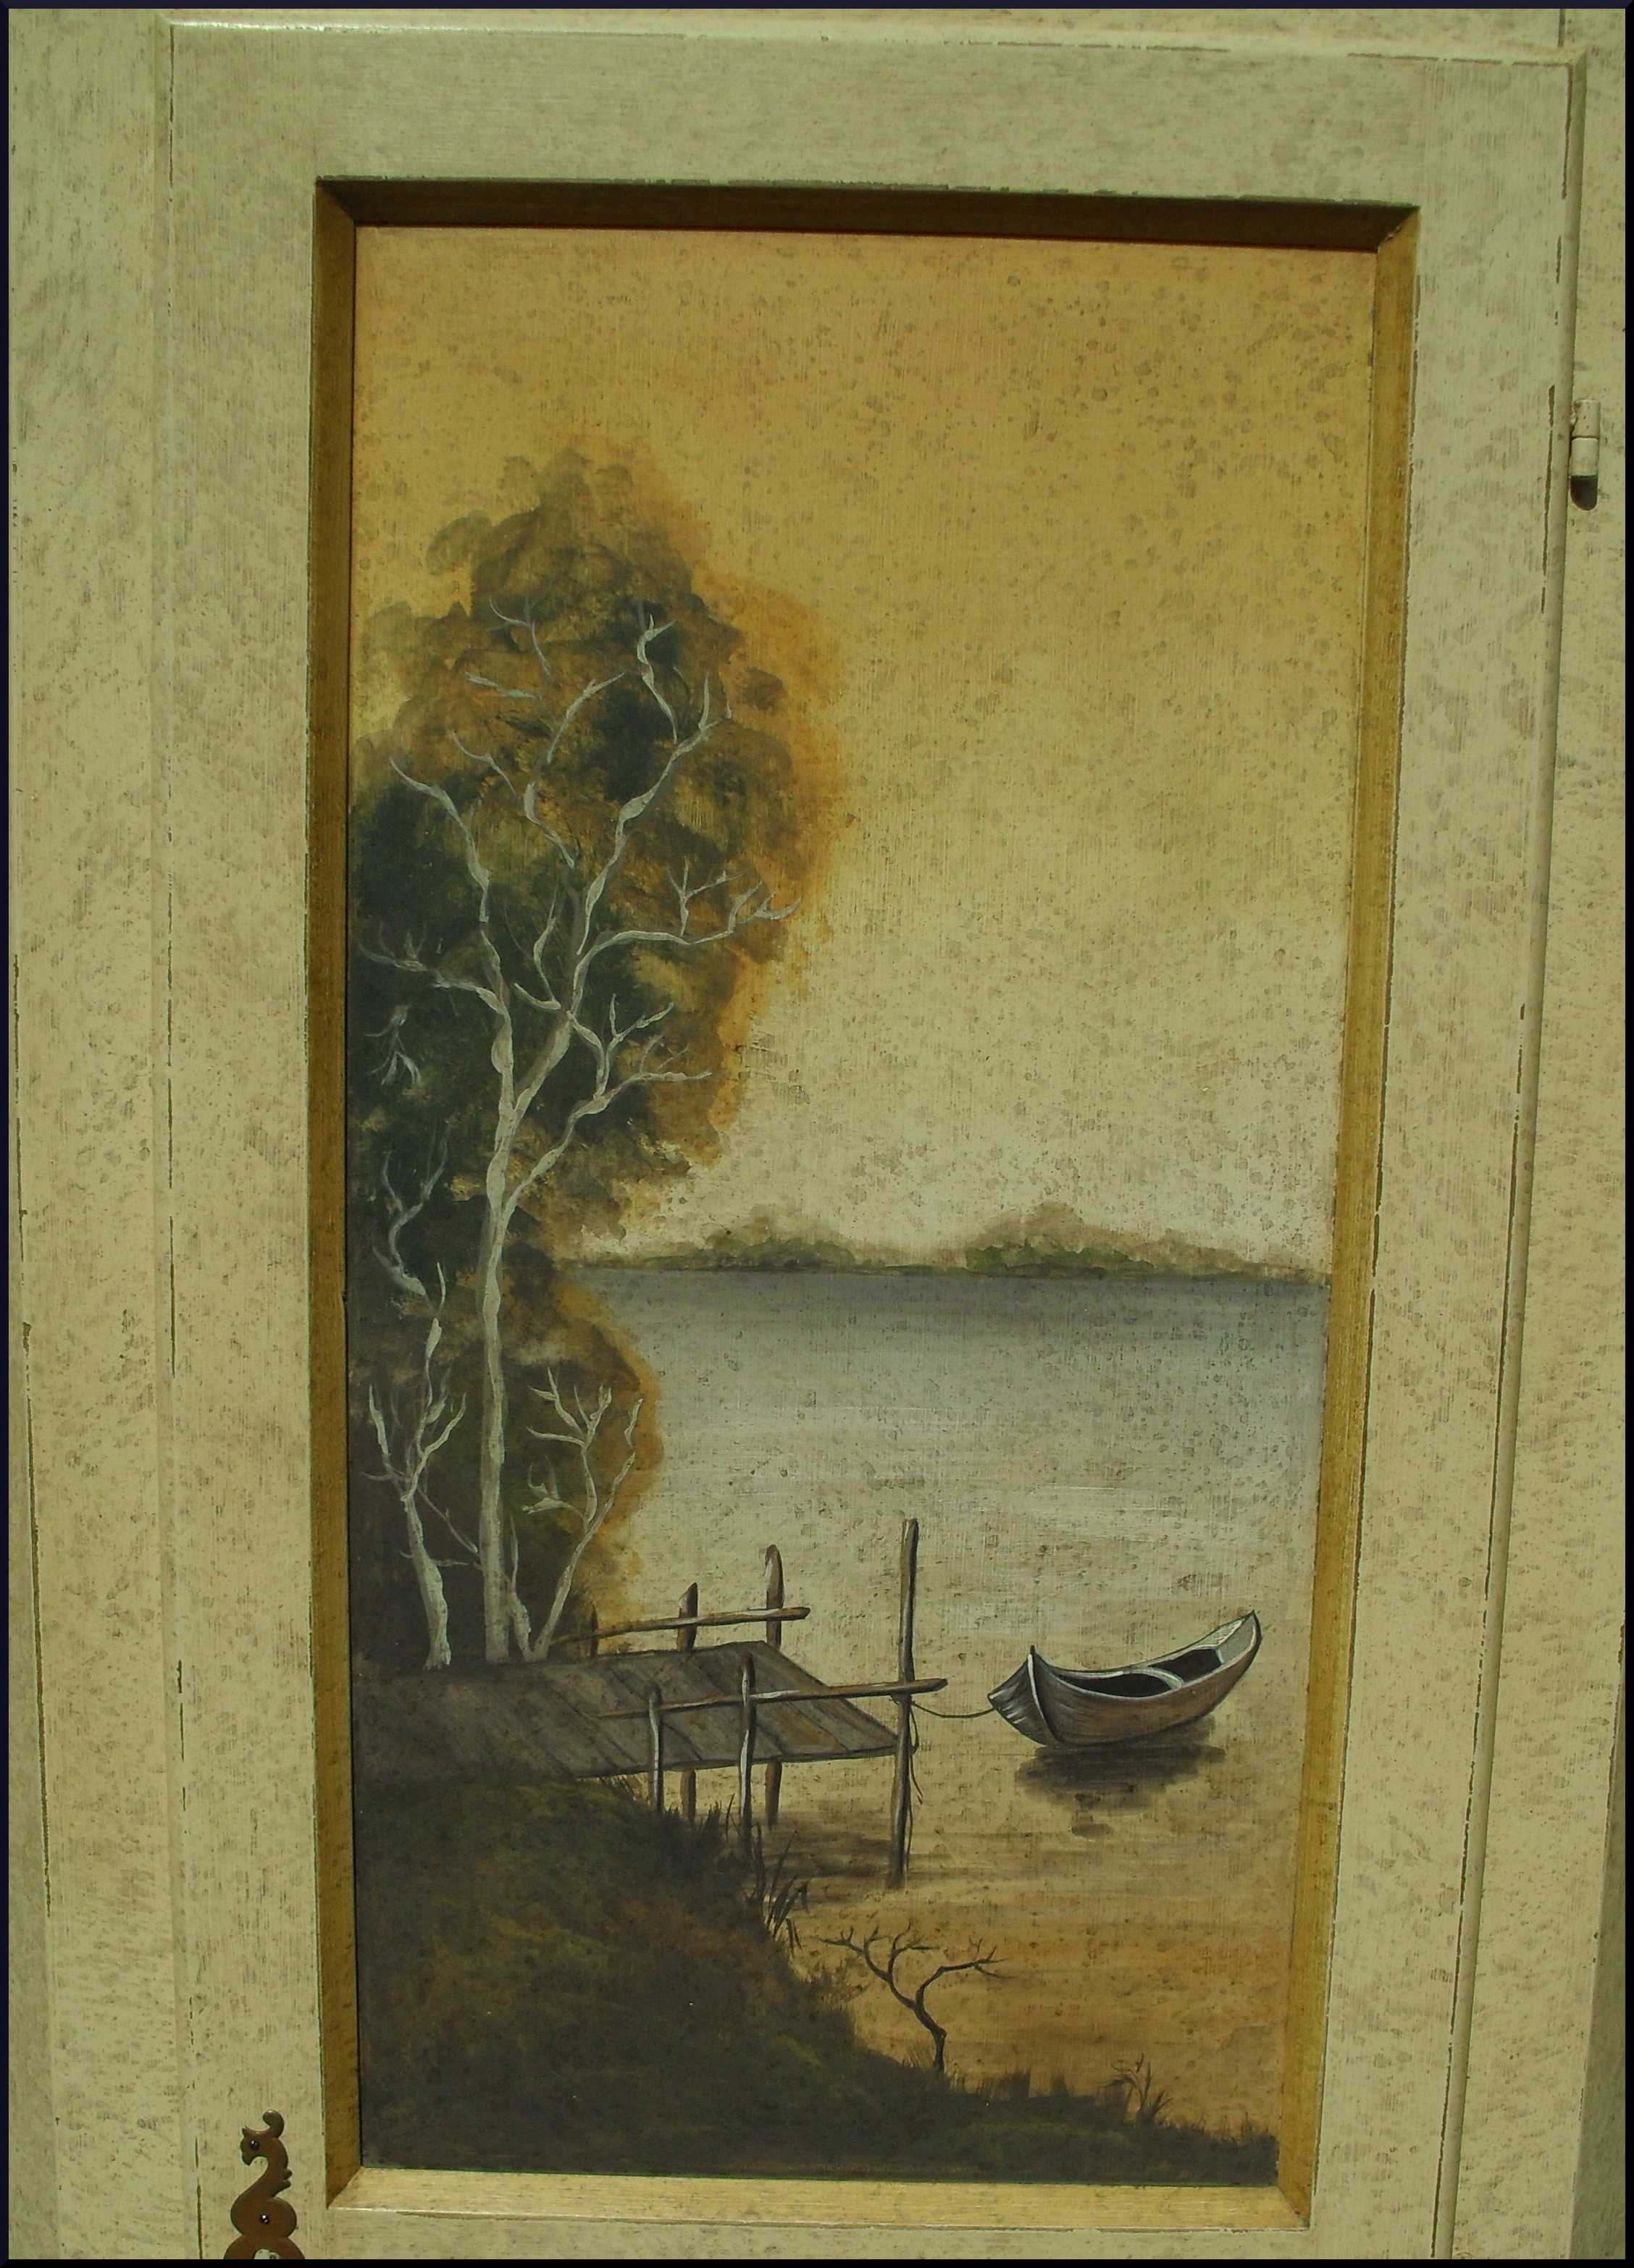 Angoliera cantonale artigianale dipinta a mano con paesaggi